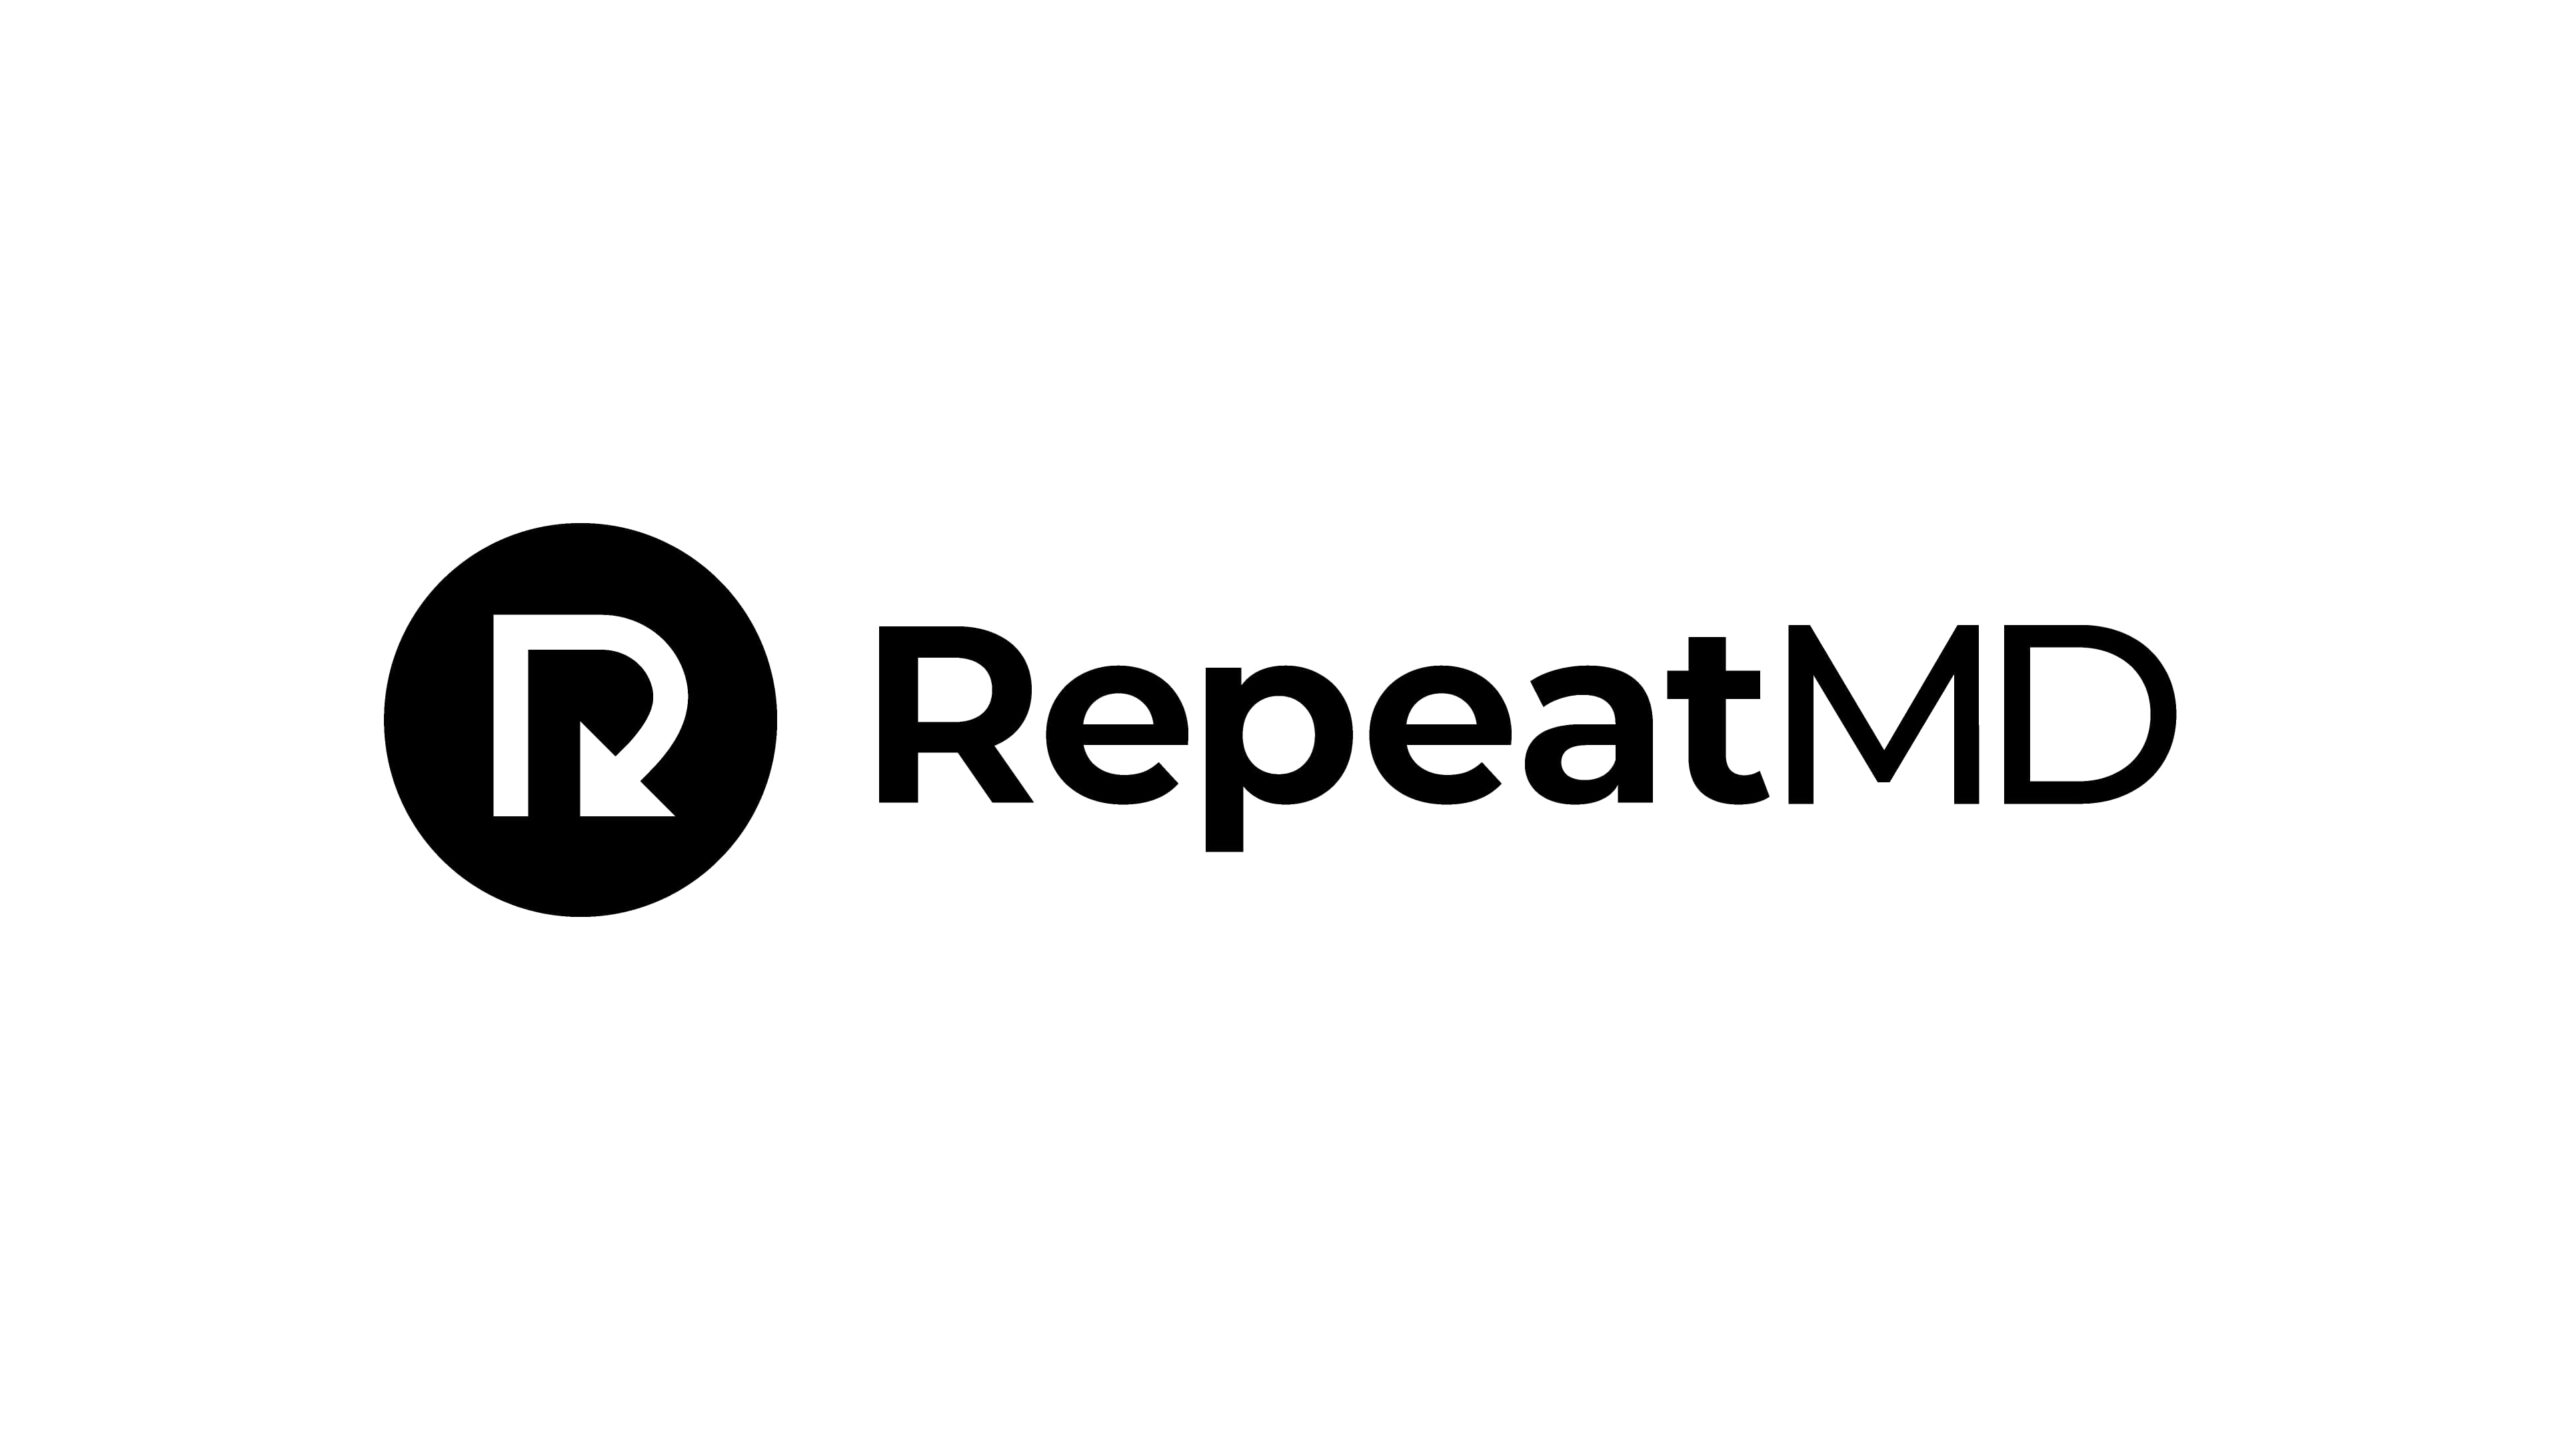 RepeatMDが4,000万ドルの資金を調達し、美容とウェルネス予約ビジネスを拡大